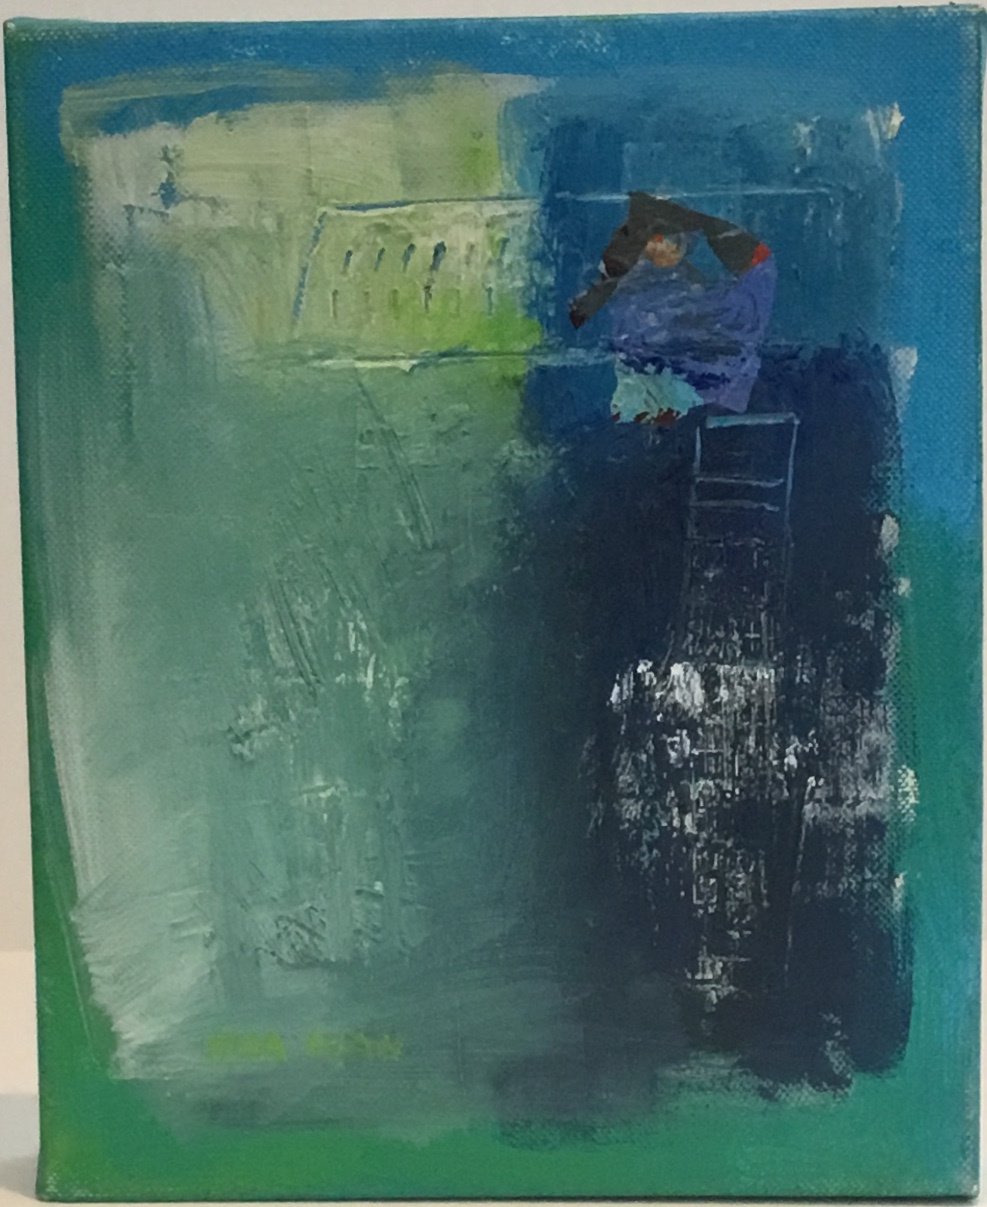 Blue Wind
acrylic on canvas
10" X 8"
$150.